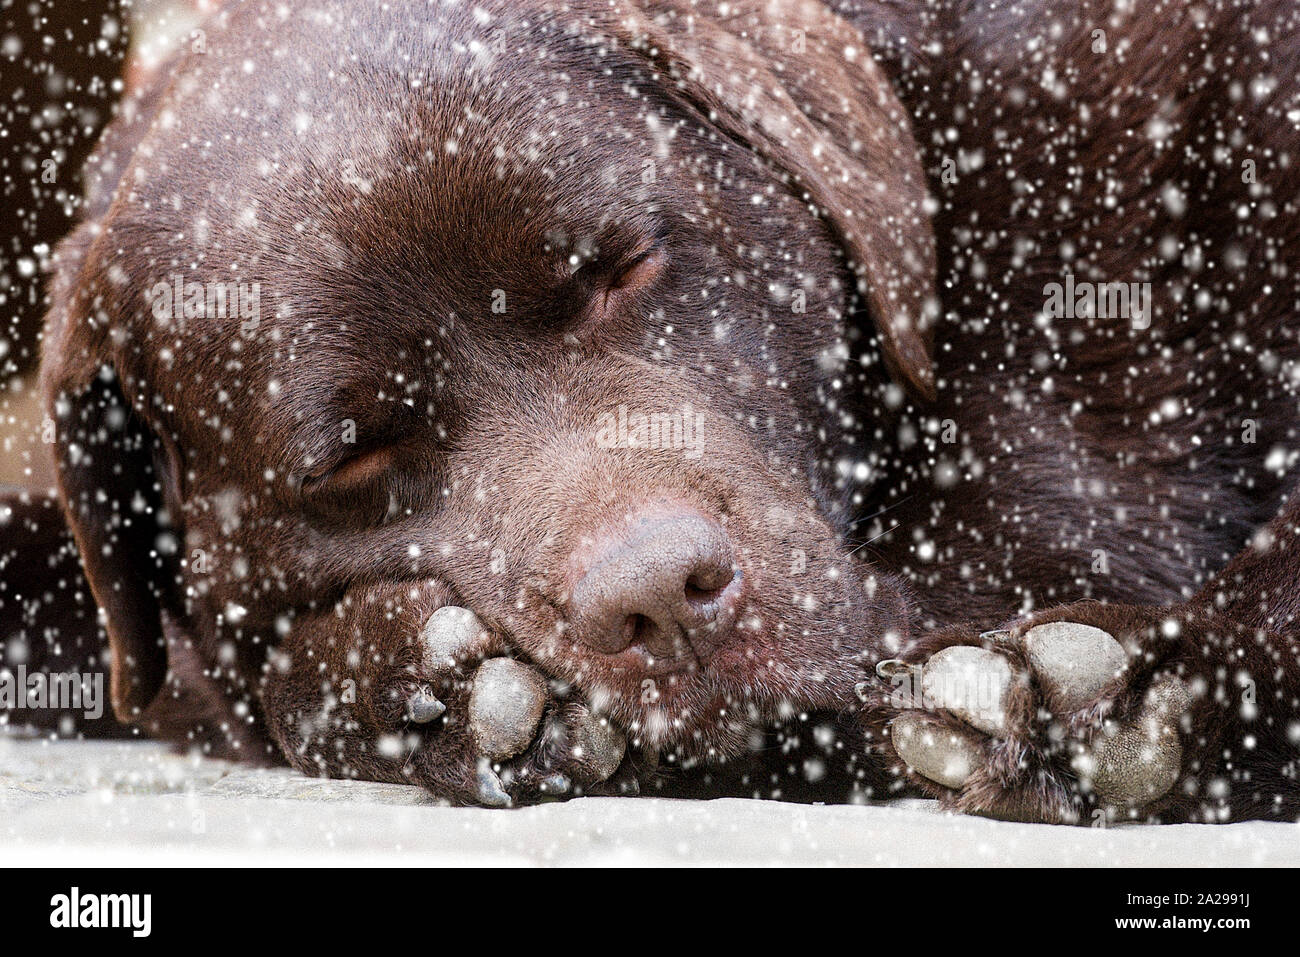 Sleeping chocolate Labrador Dog surrounded with snow Stock Photo